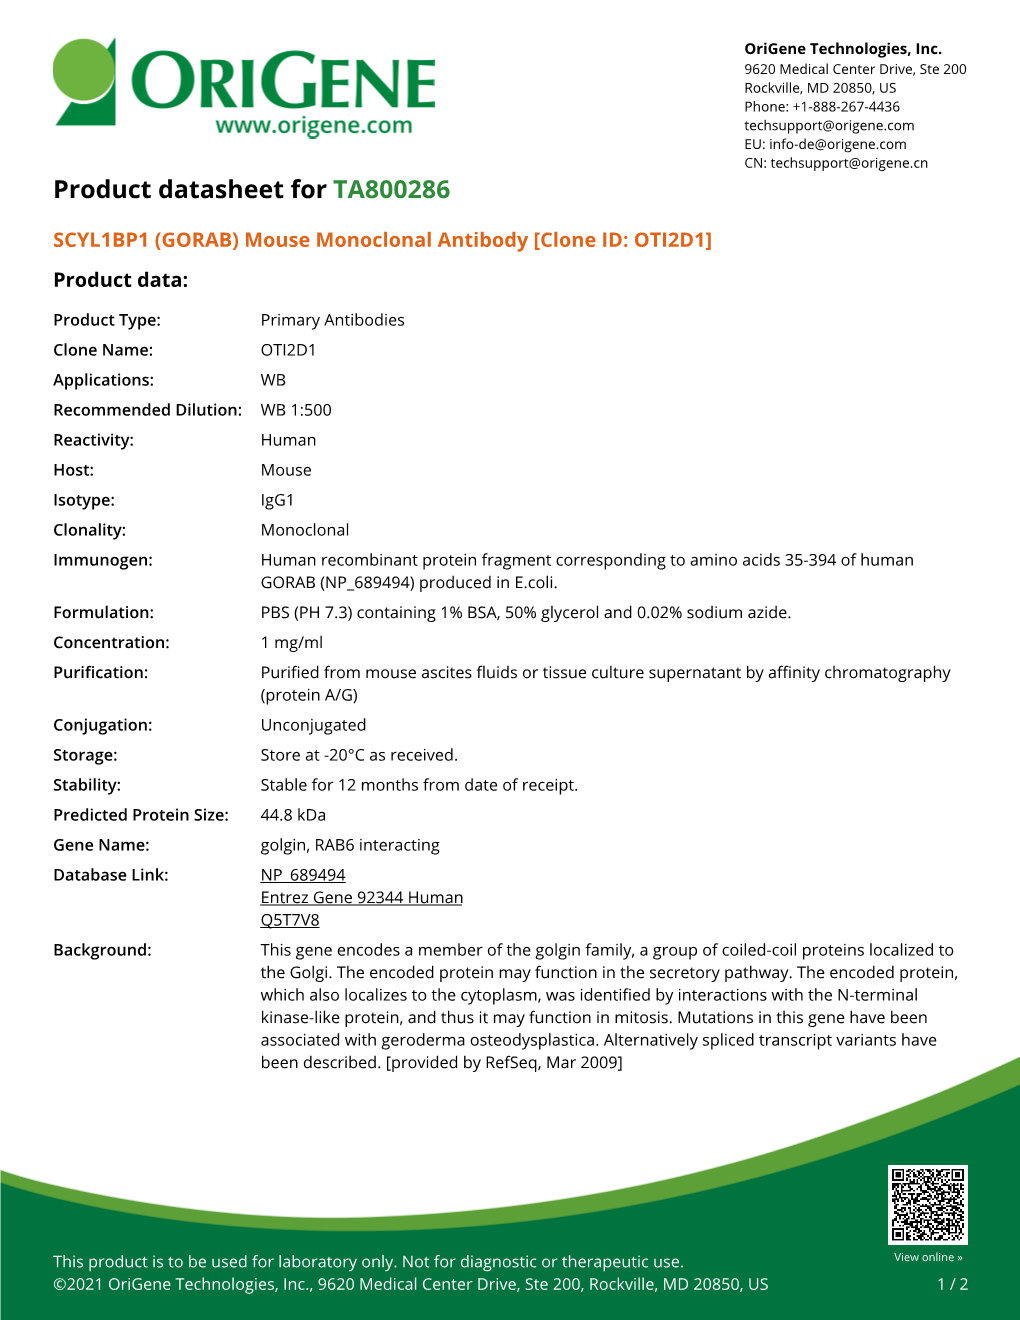 SCYL1BP1 (GORAB) Mouse Monoclonal Antibody [Clone ID: OTI2D1] Product Data